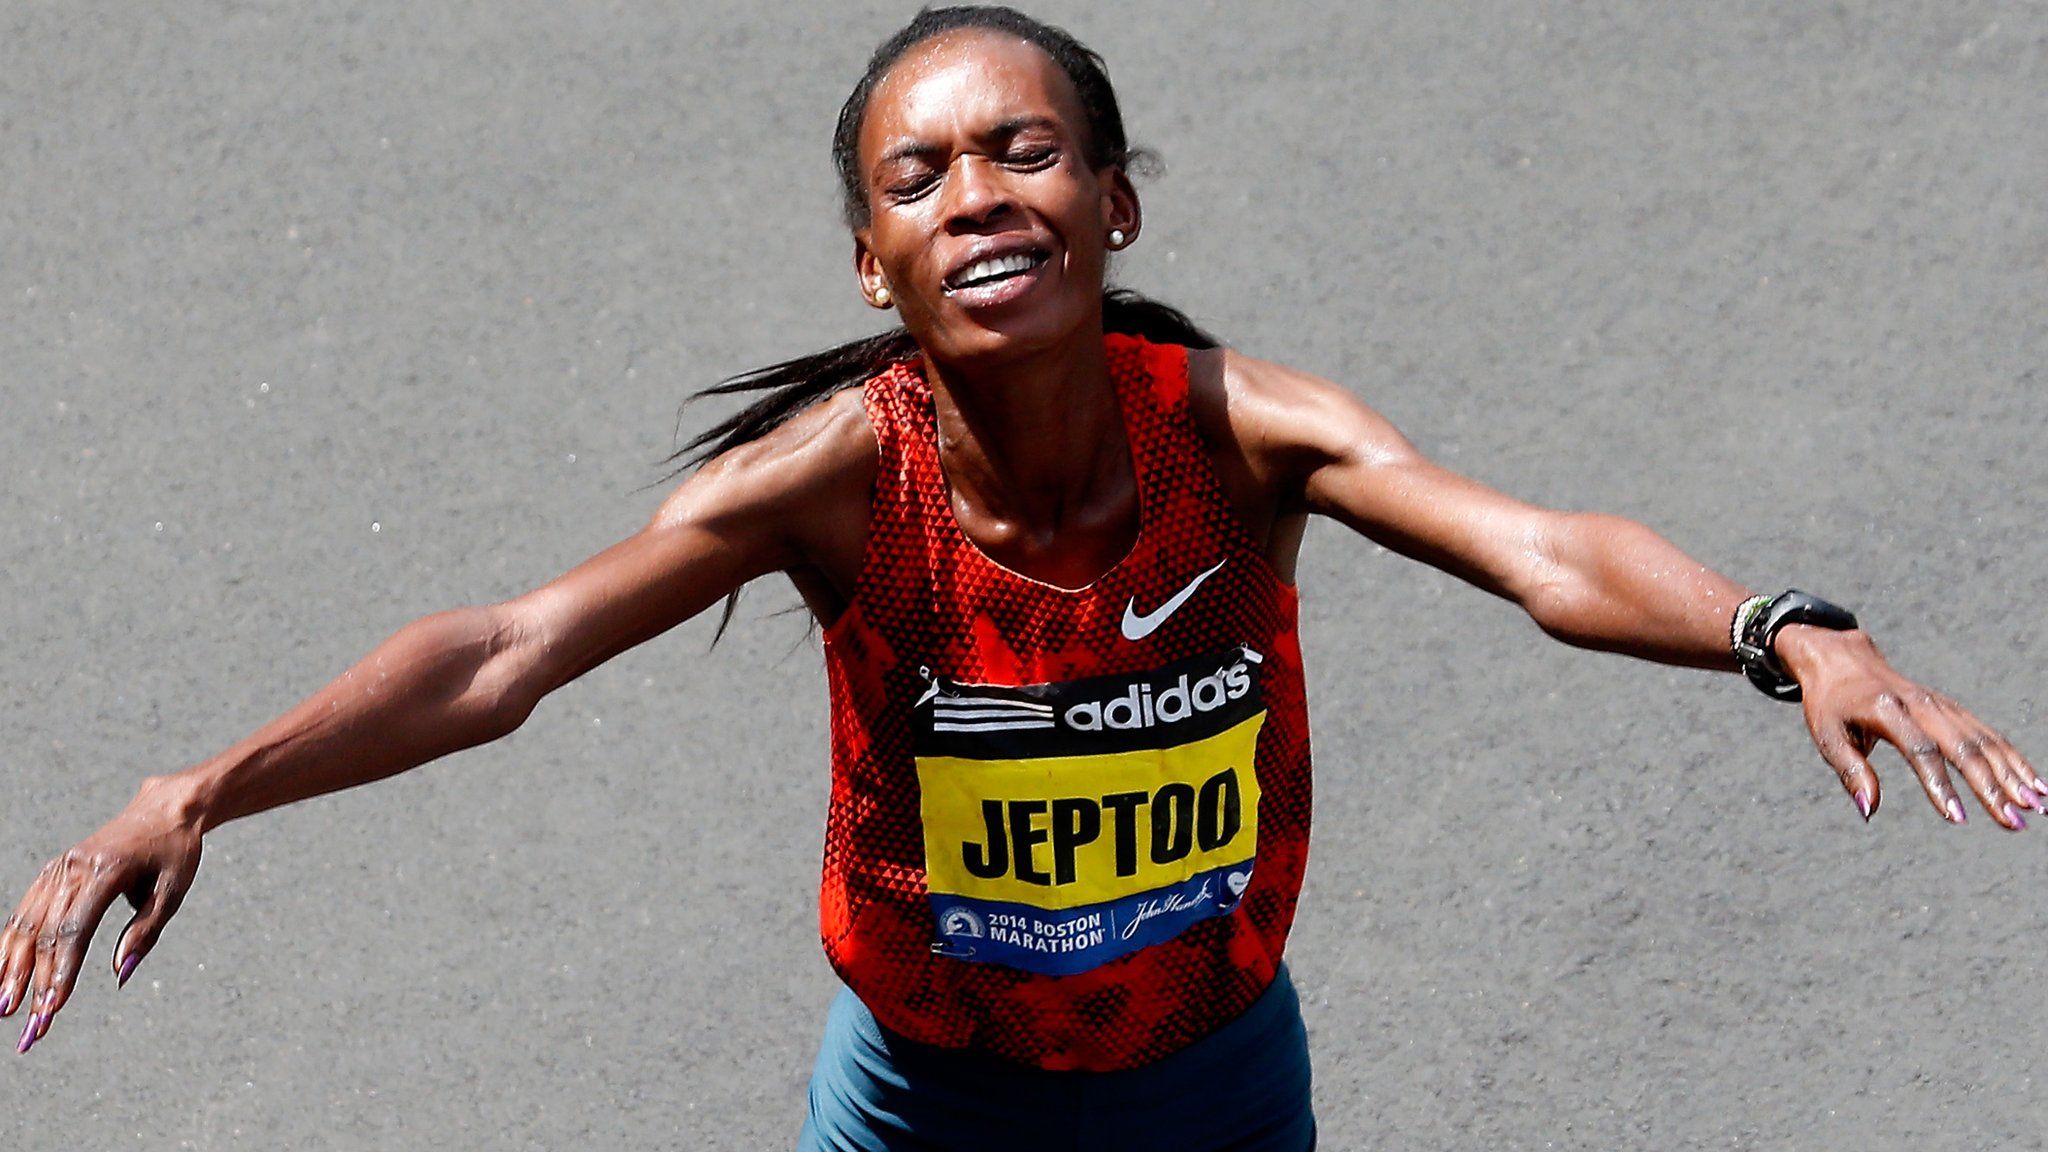 Kenya's Rita Jeptoo finishing the 2014 Boston Marathon